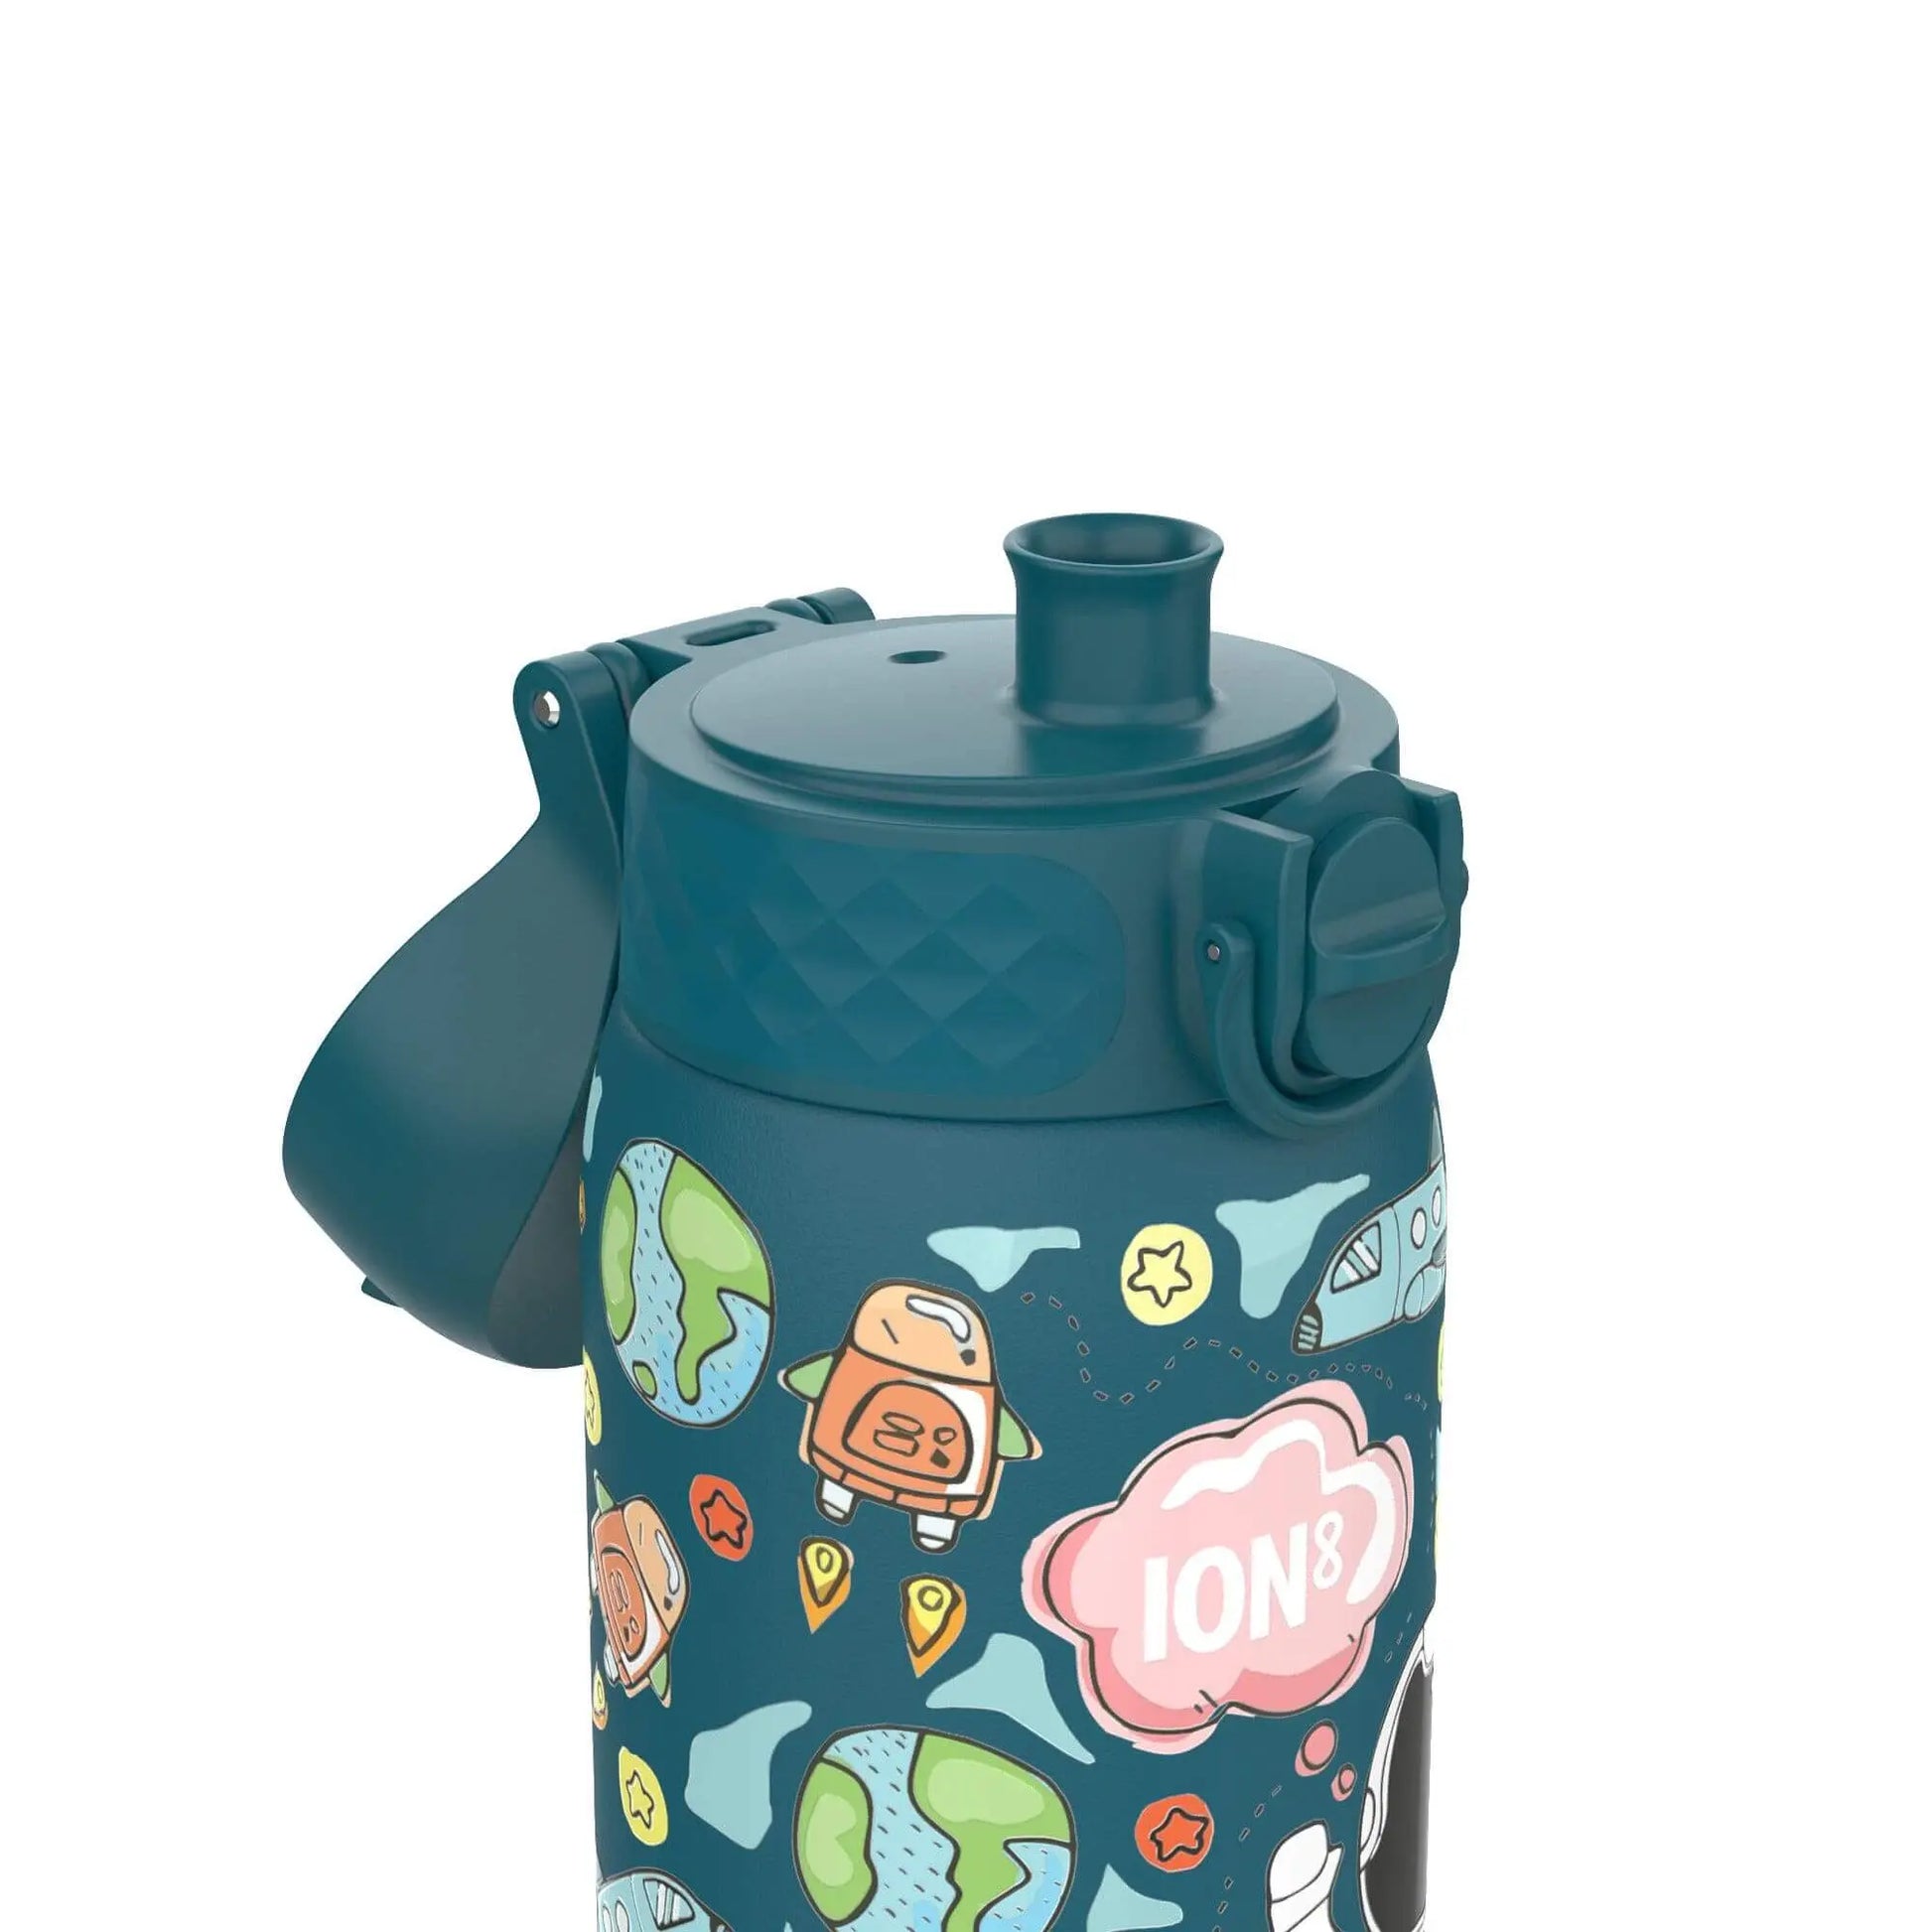 Buy Ion8 Bugs Cream Water Bottle - 400ml, Water bottles